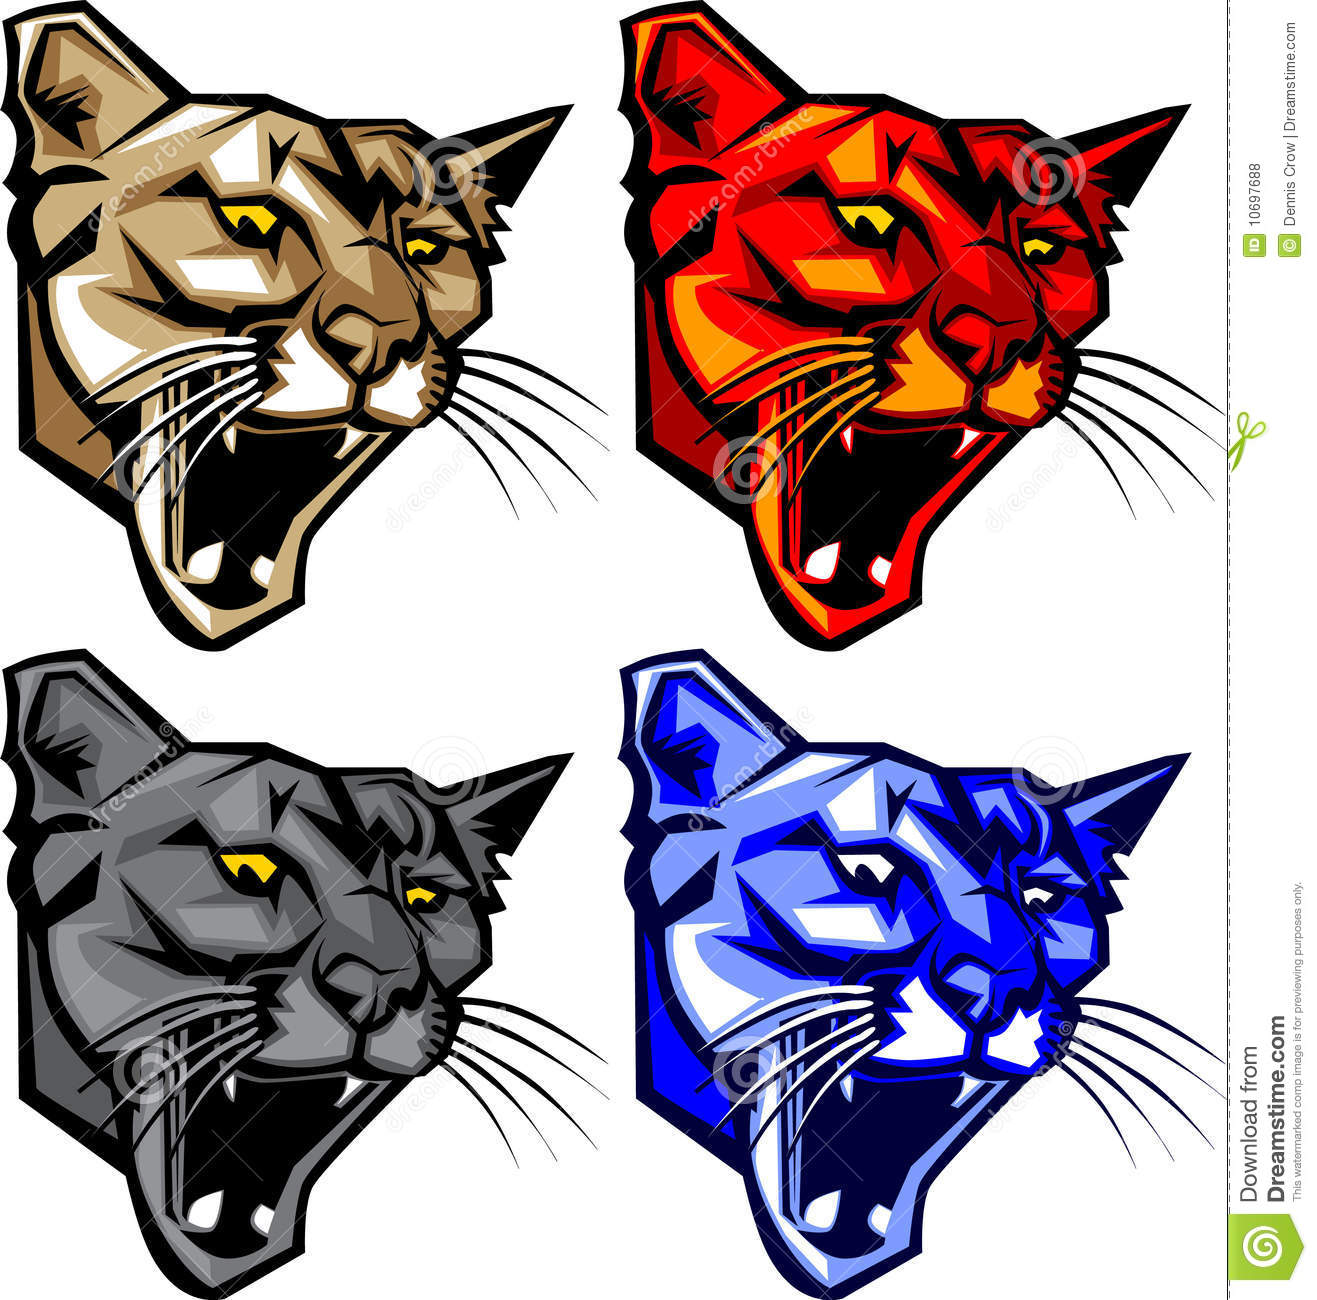 Cougar   Panther Mascot Logo Royalty Free Stock Photos   Image